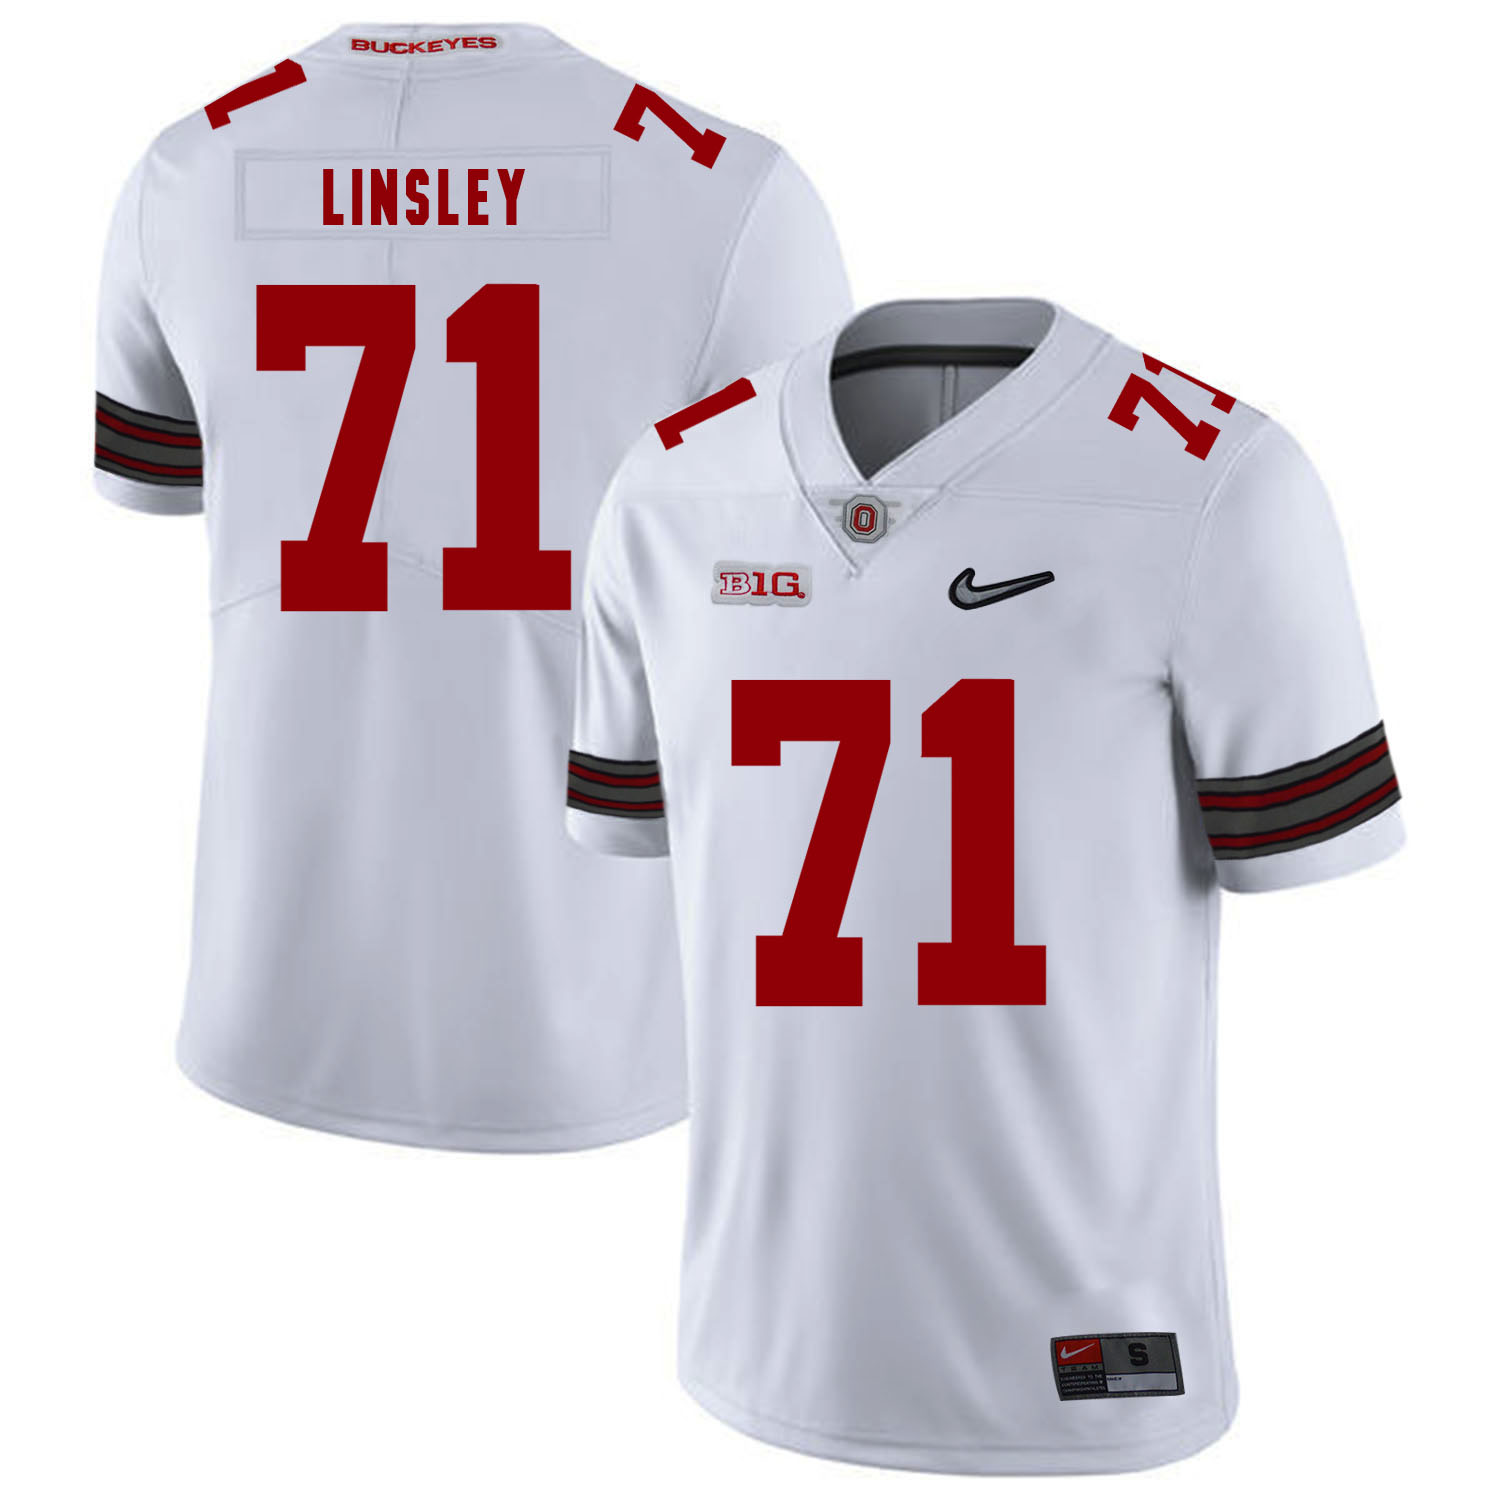 Ohio State Buckeyes 71 Corey Linsley White Diamond Nike Logo College Football Jersey